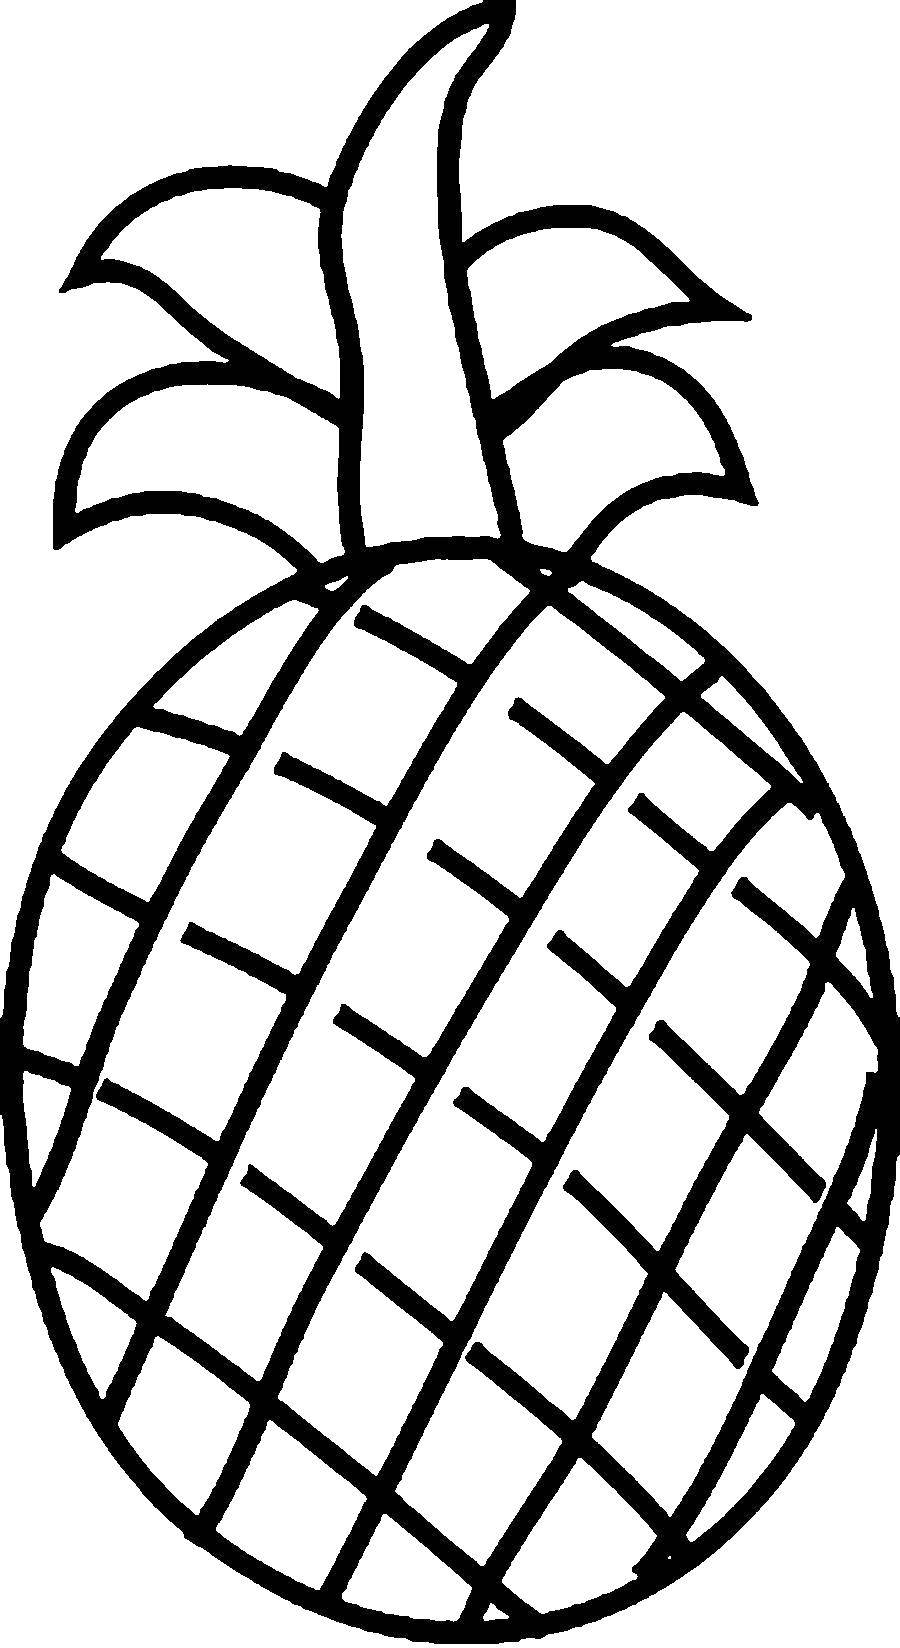 Название: Раскраска Контур ананаса. Категория: Контуры фруктов. Теги: контур, ананас.